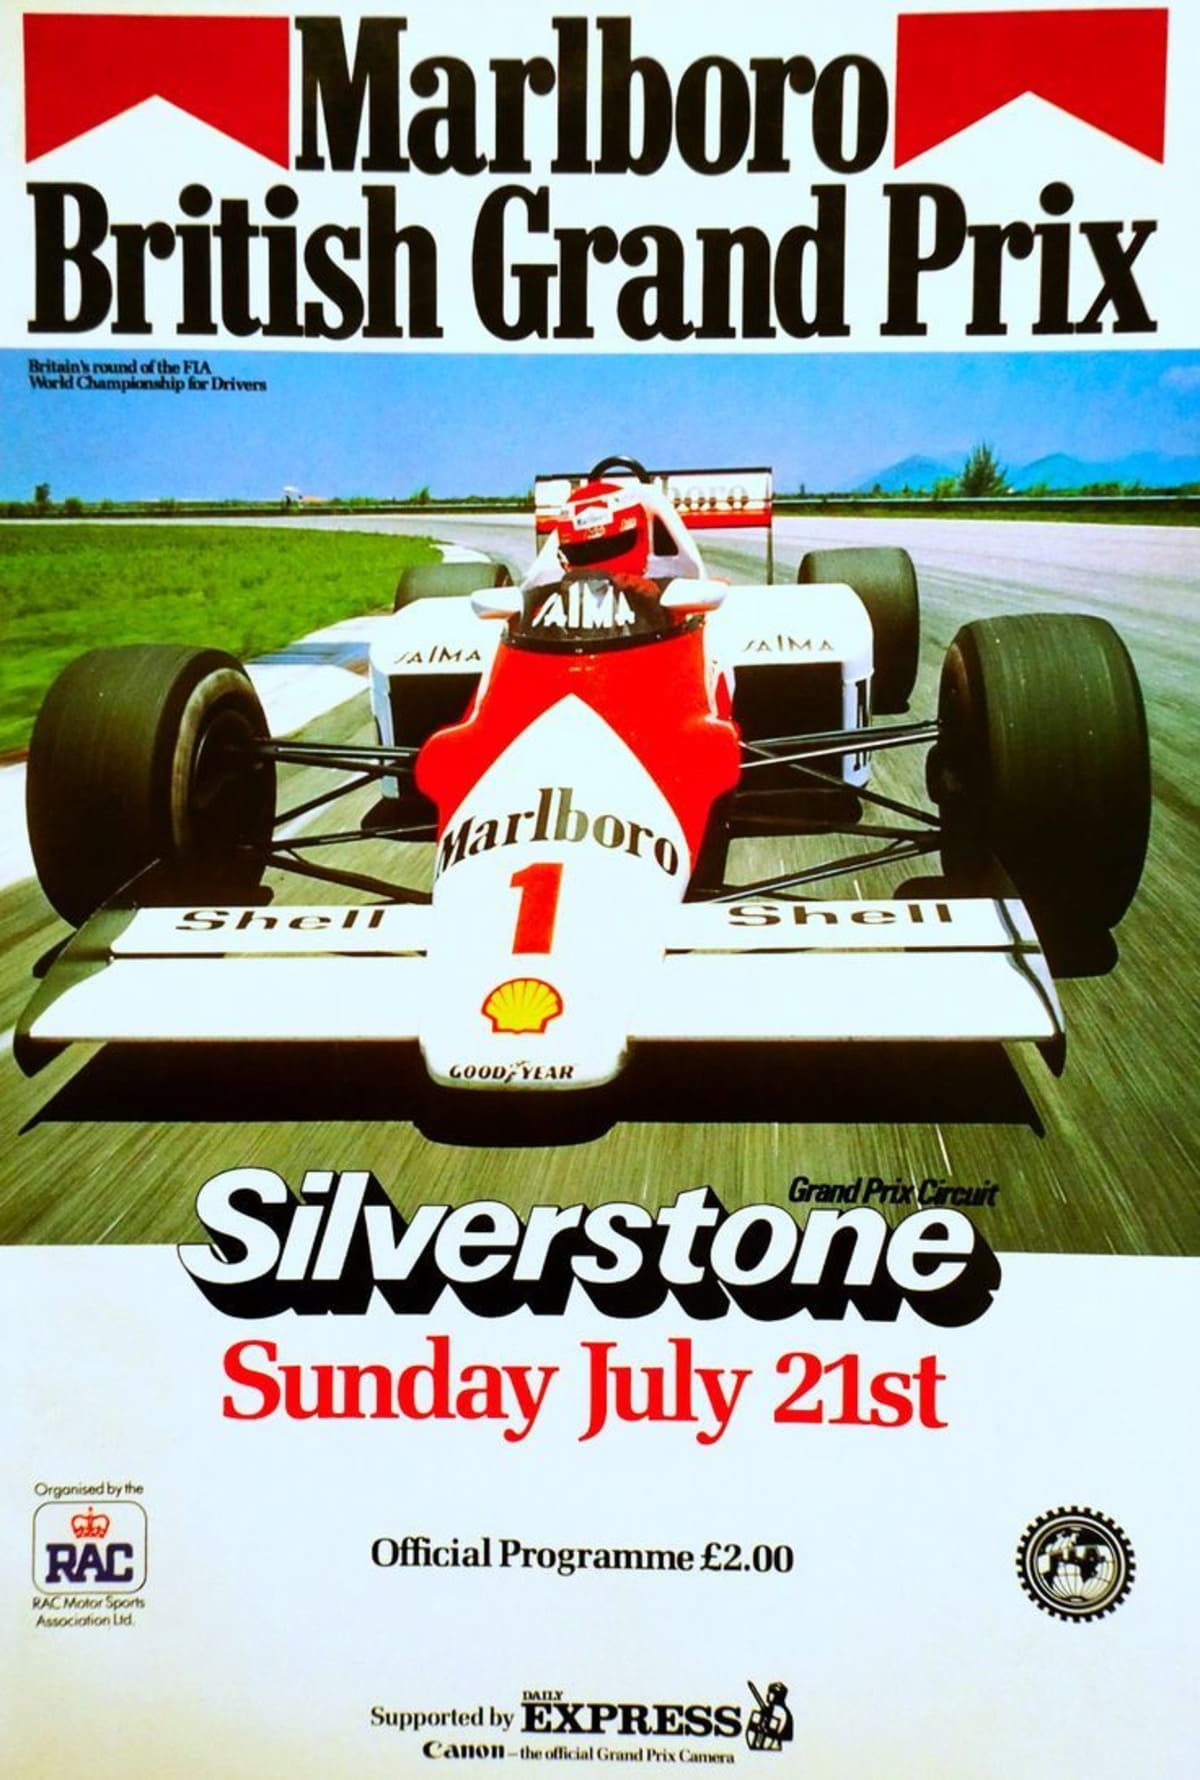 Old Marboro Grand Prix Advert